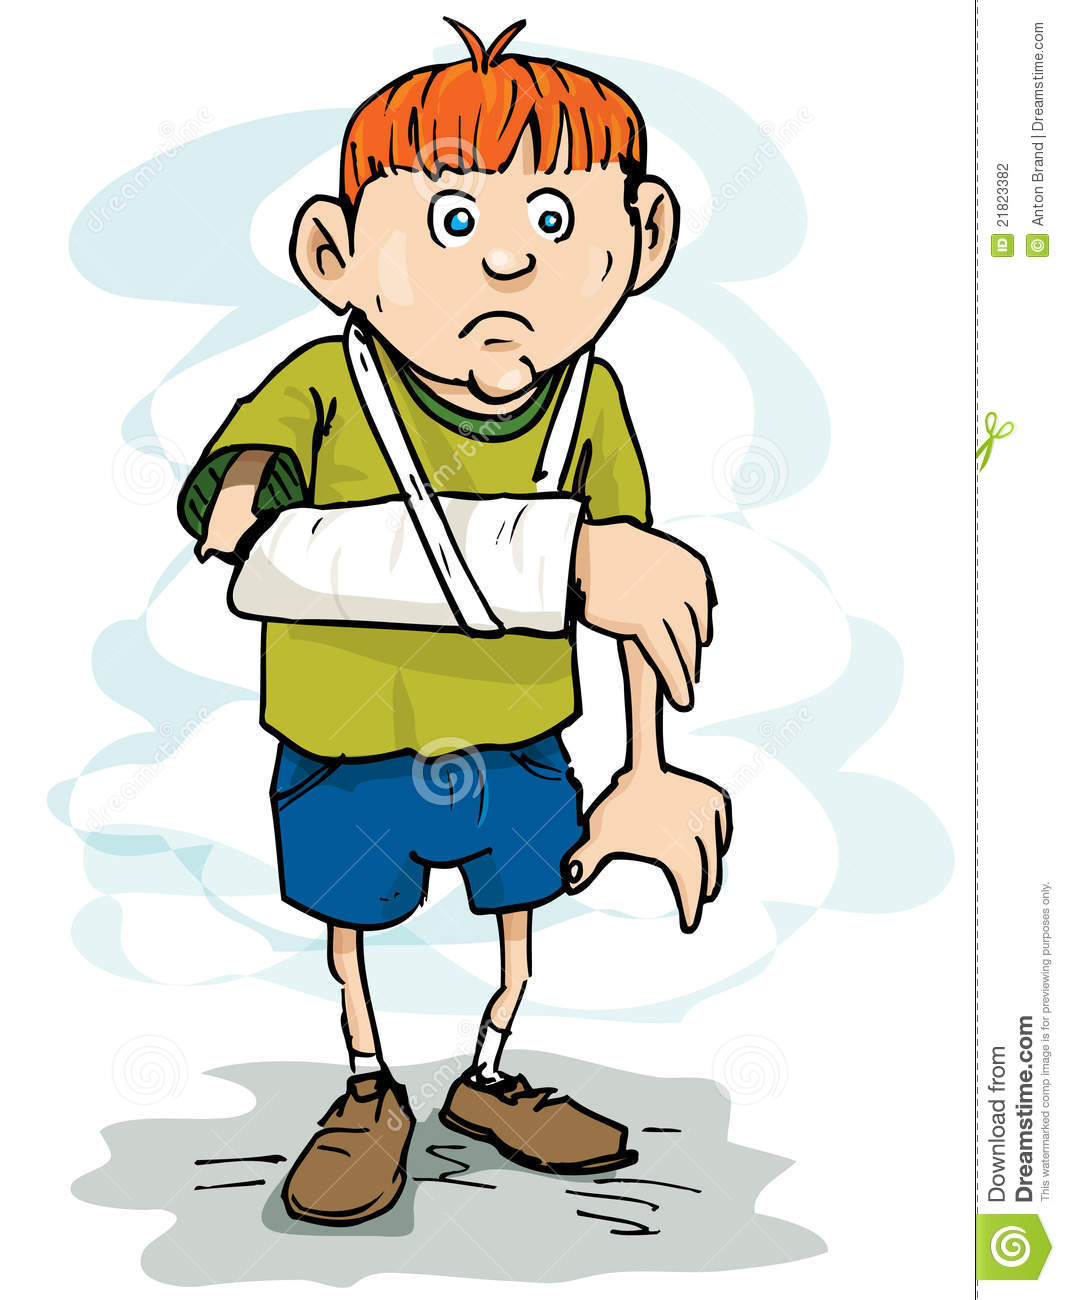 Cartoon Boy With A Broken Arm Stock Photography   Image  21823382